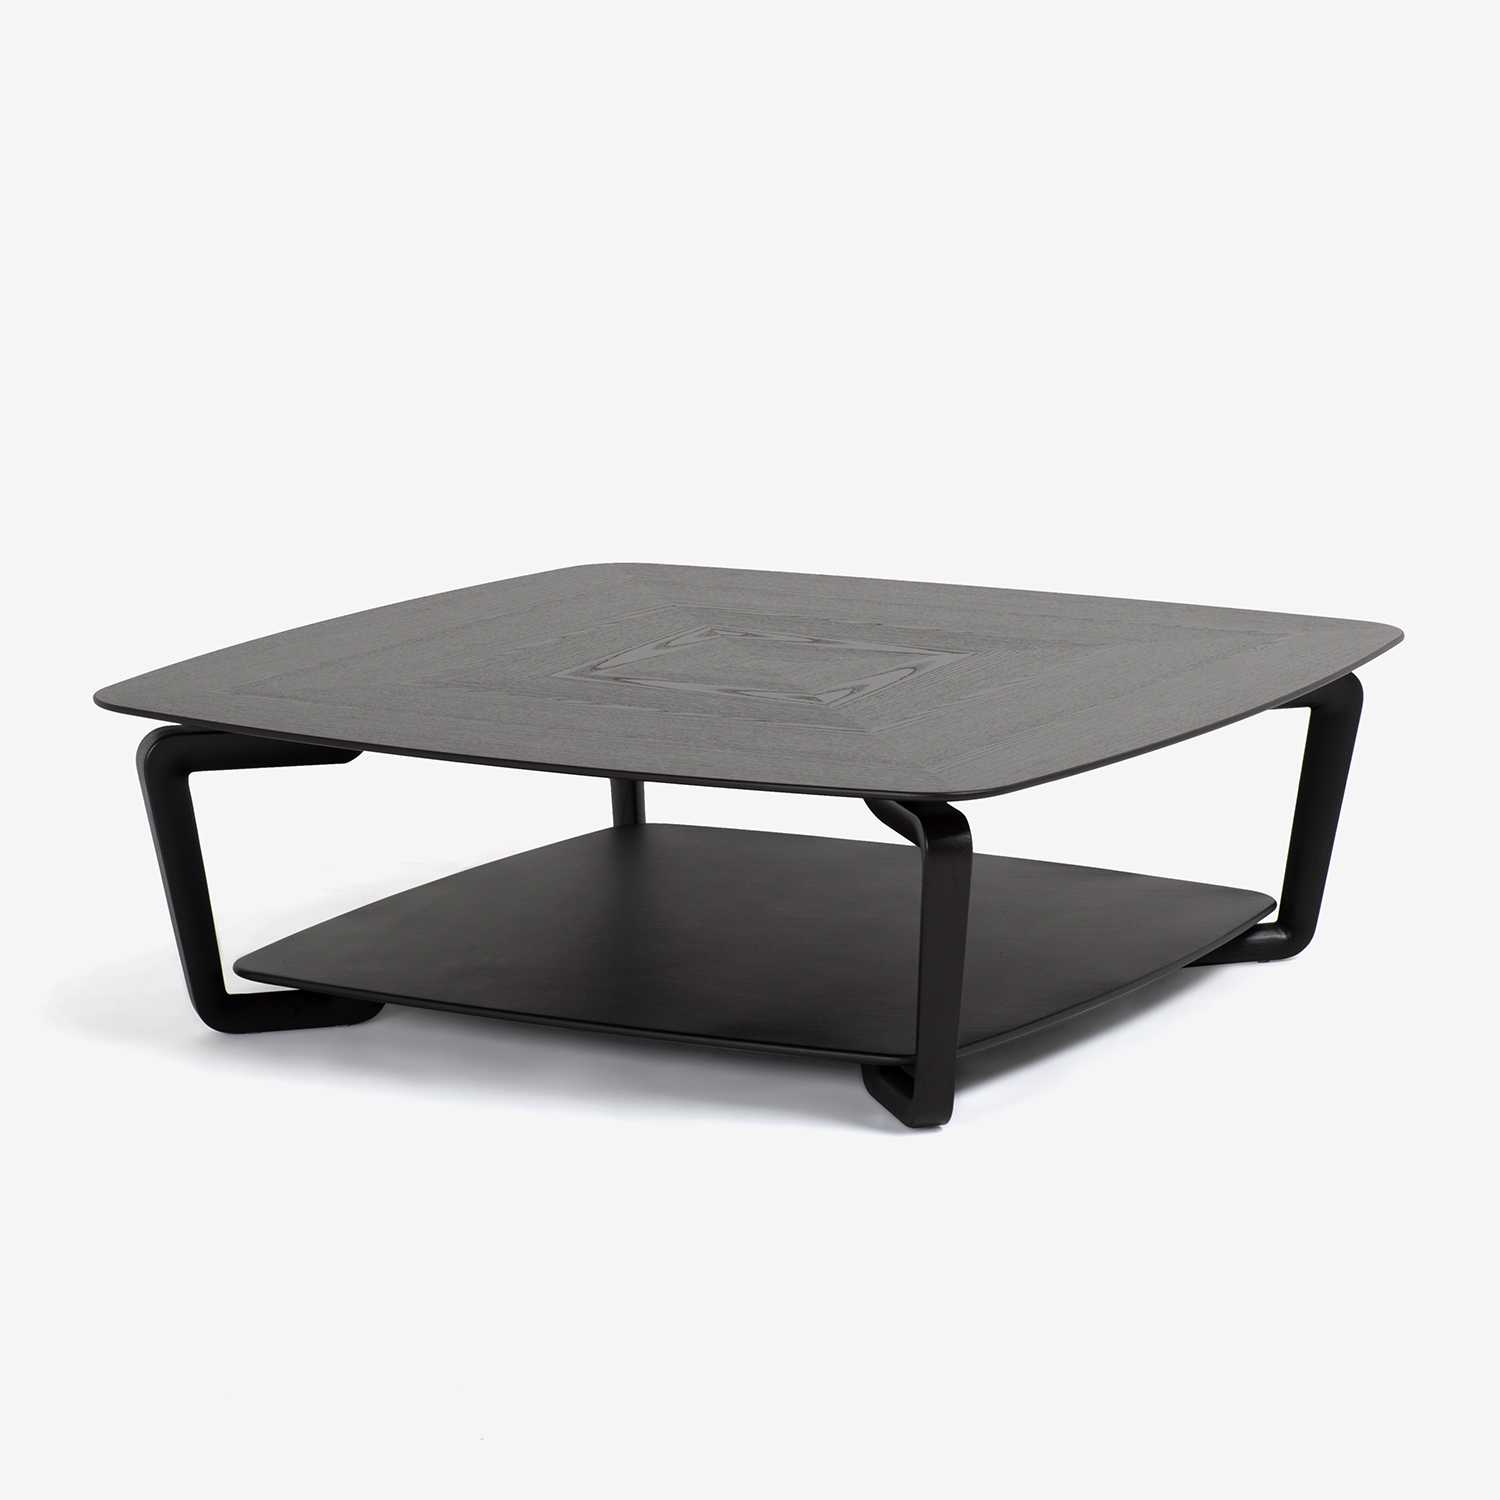 PoltronaFrau（ポルトローナ・フラウ）センターテーブル「フィオリーレ」120cm角 アッシュ材ダークブラウン色/革ブラック色